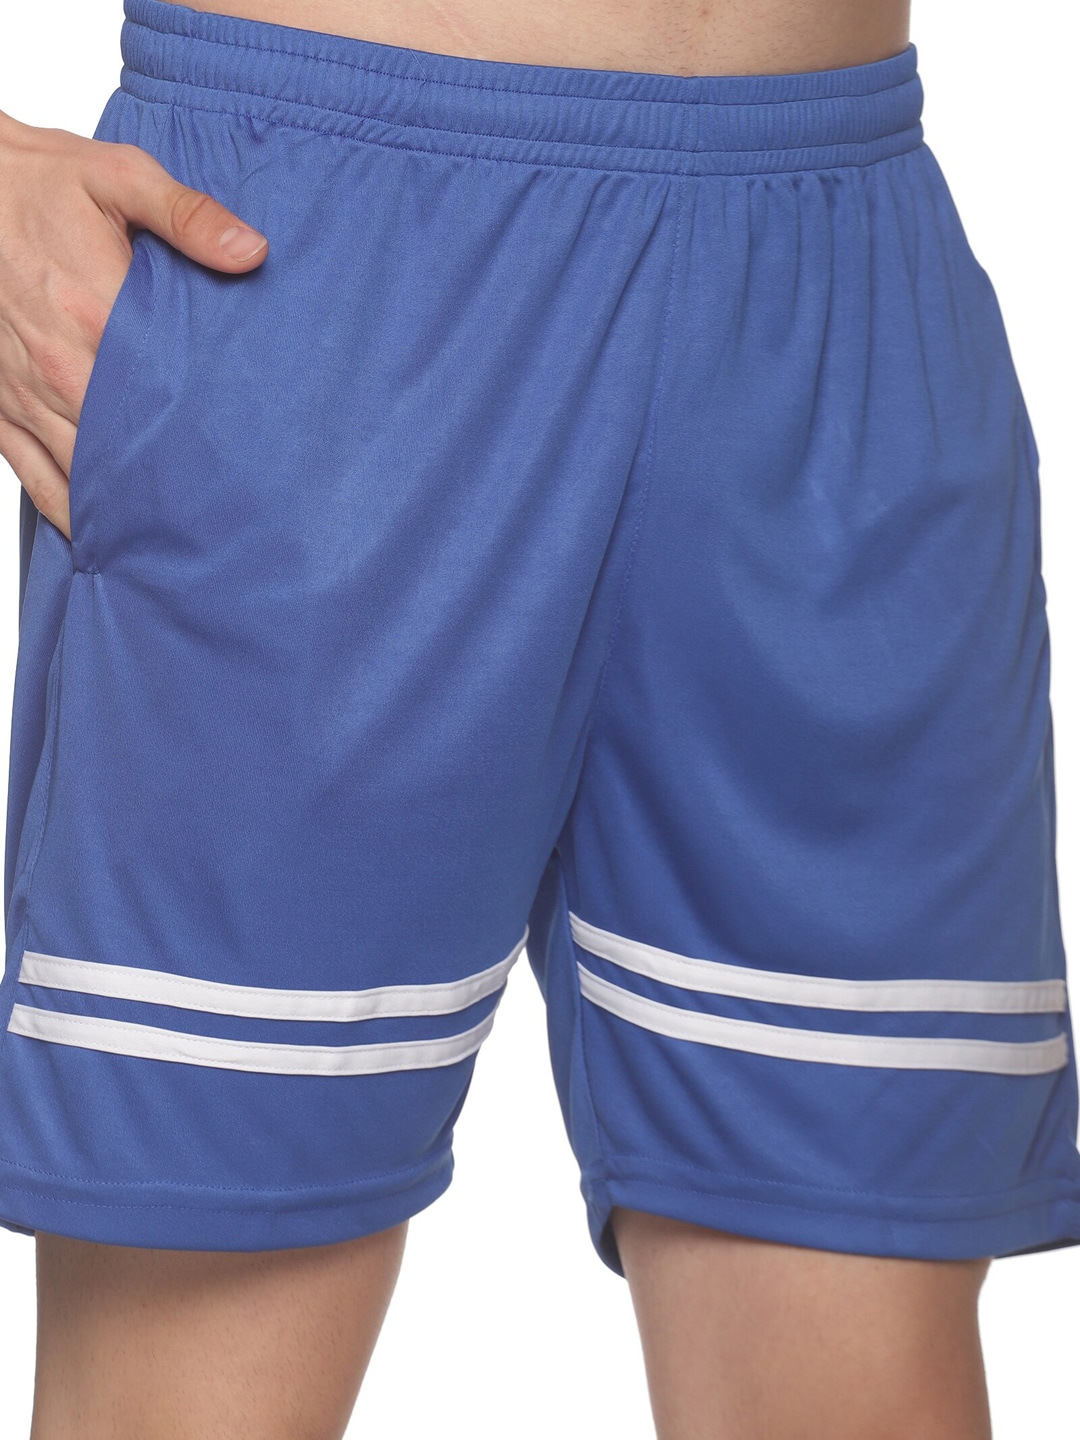 Clothing Tracksuits | HPS Sports Men Blue & White Striped Sports Tracksuit - QO52405